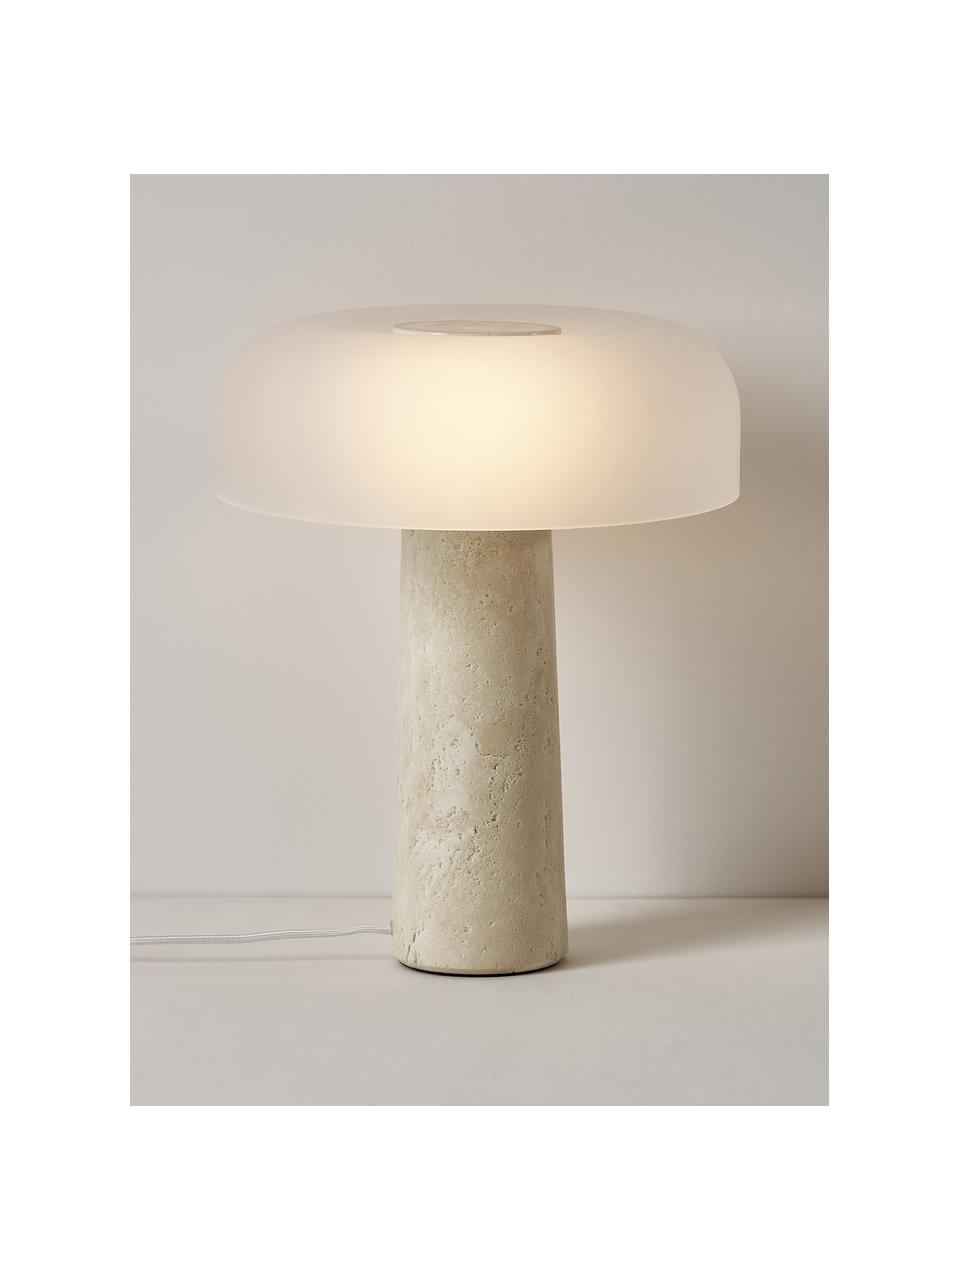 Lampe à poser avec pied en travertin Carla, Blanc, beige, travertin, Ø 32 x haut. 39 cm